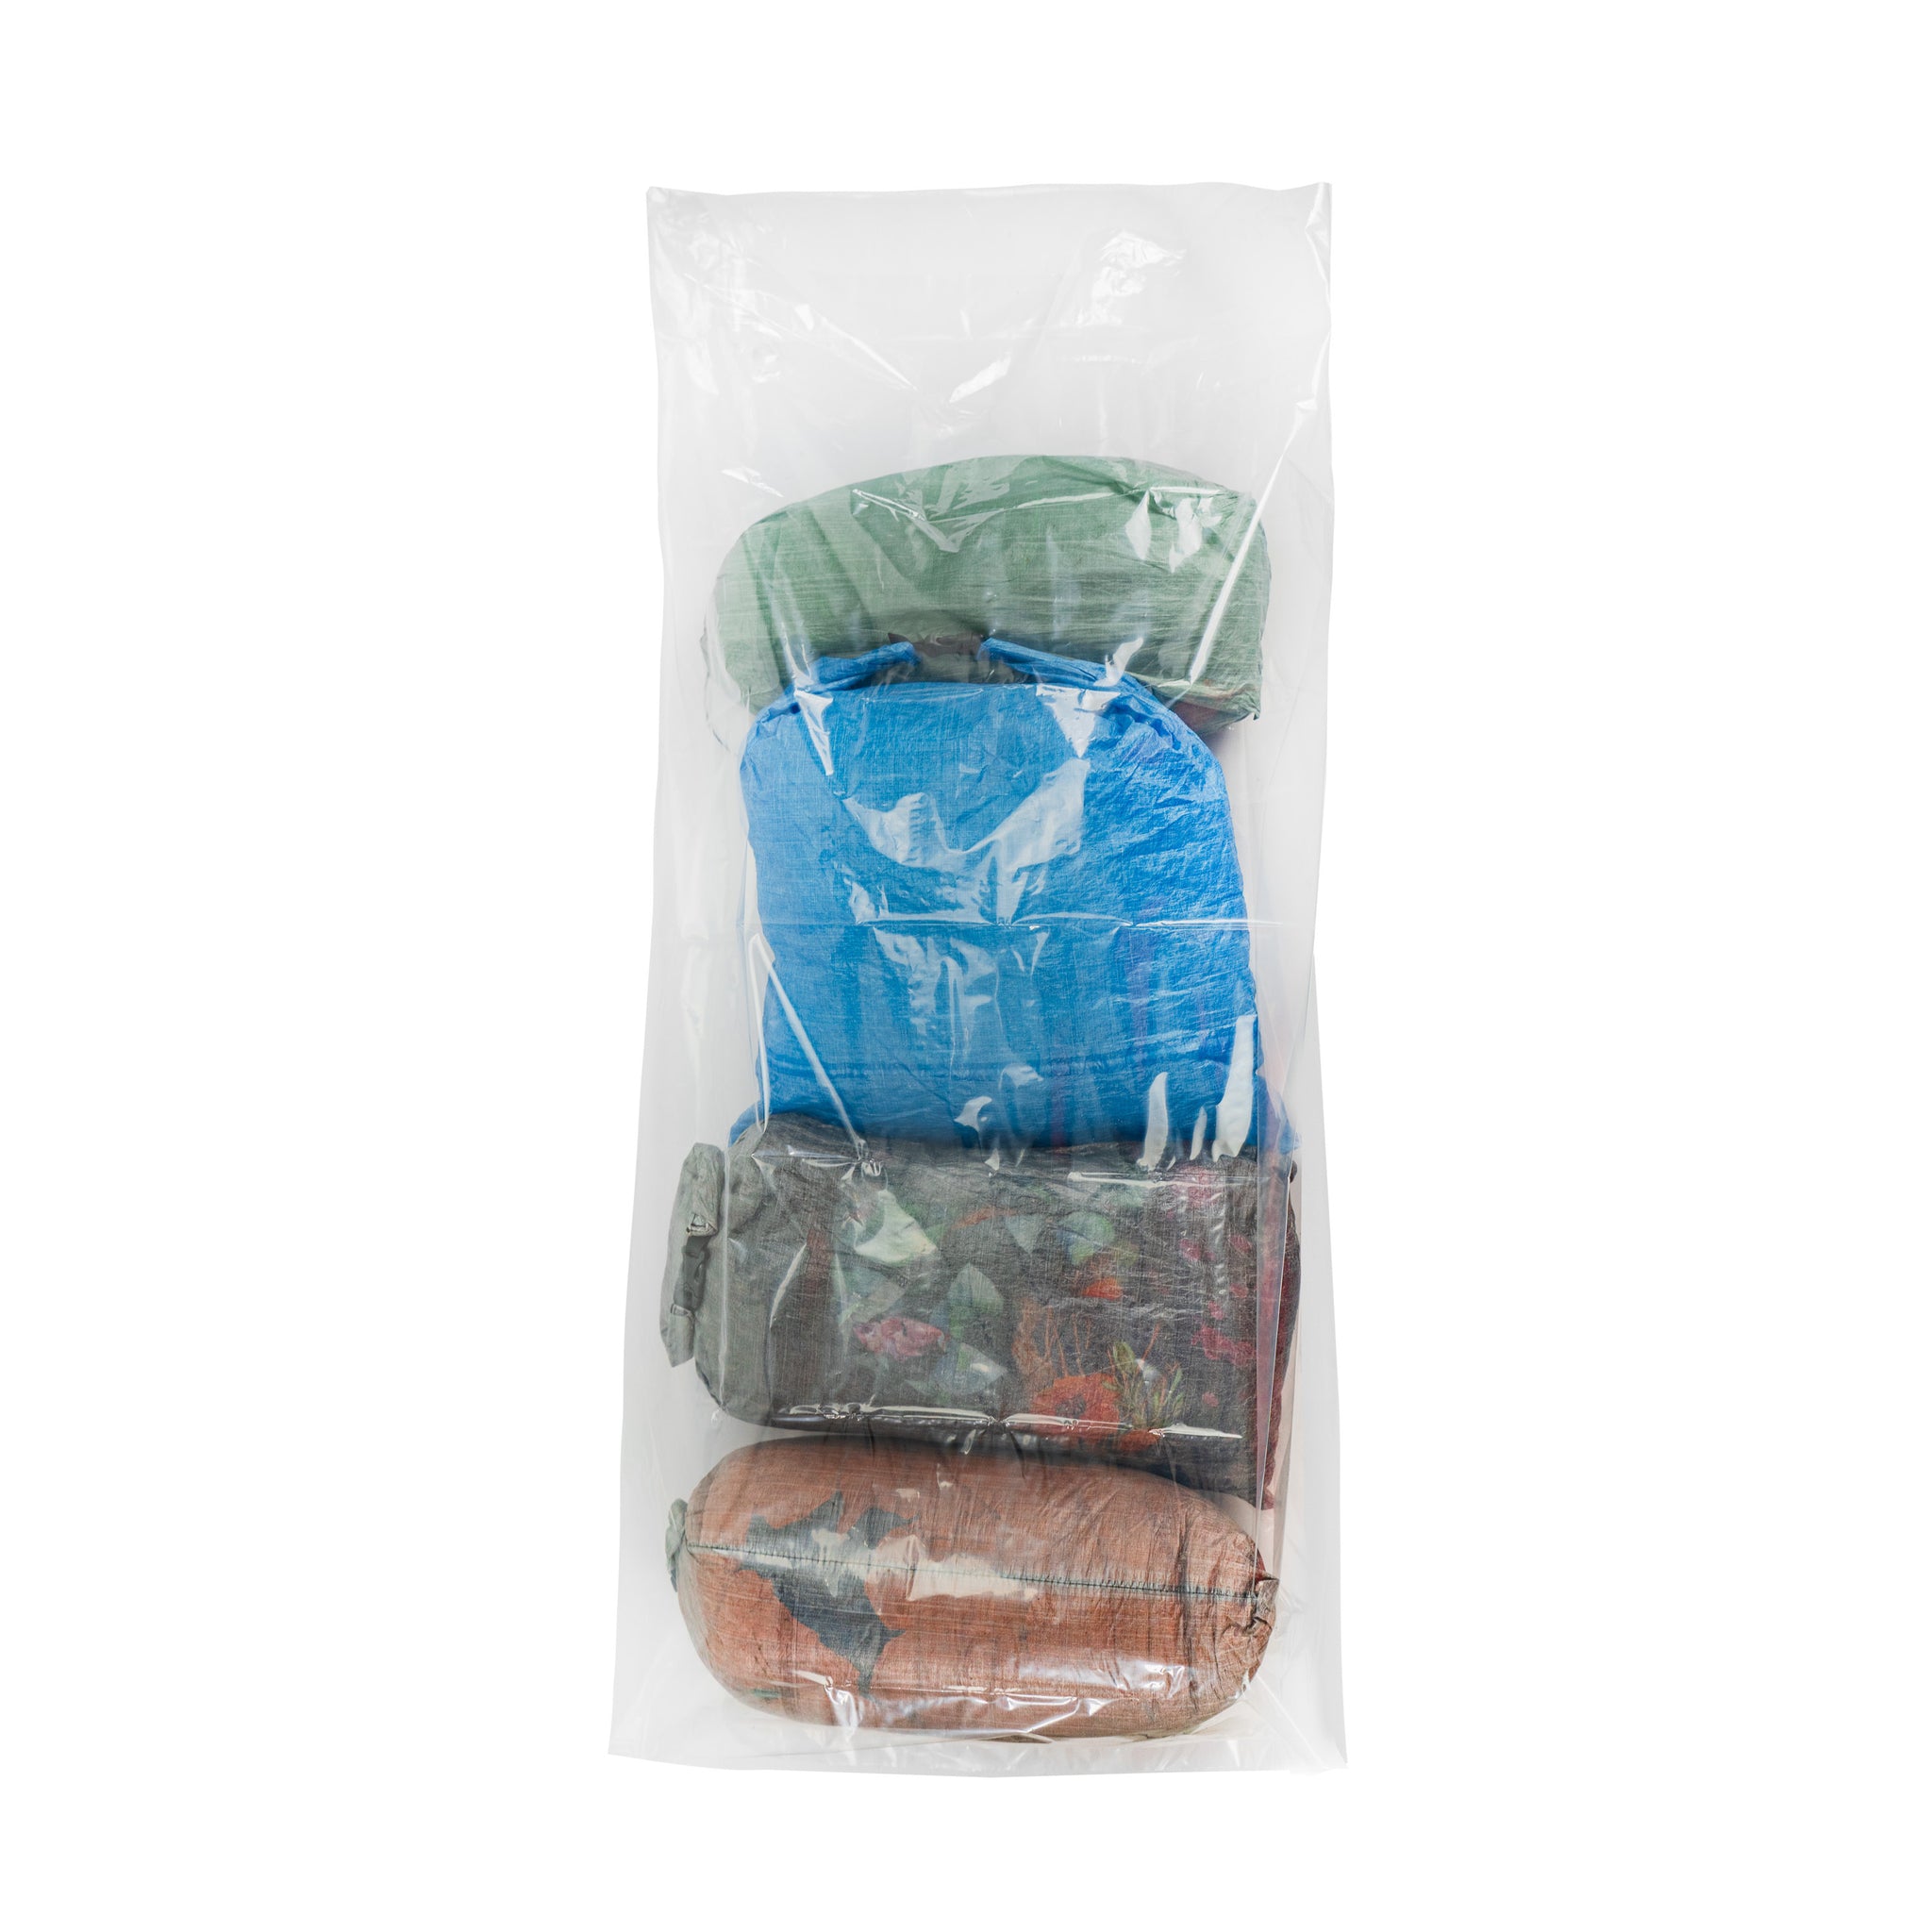 Moisture-Proof Gallon Zipper Bag Food Grade Plastic Food Storage